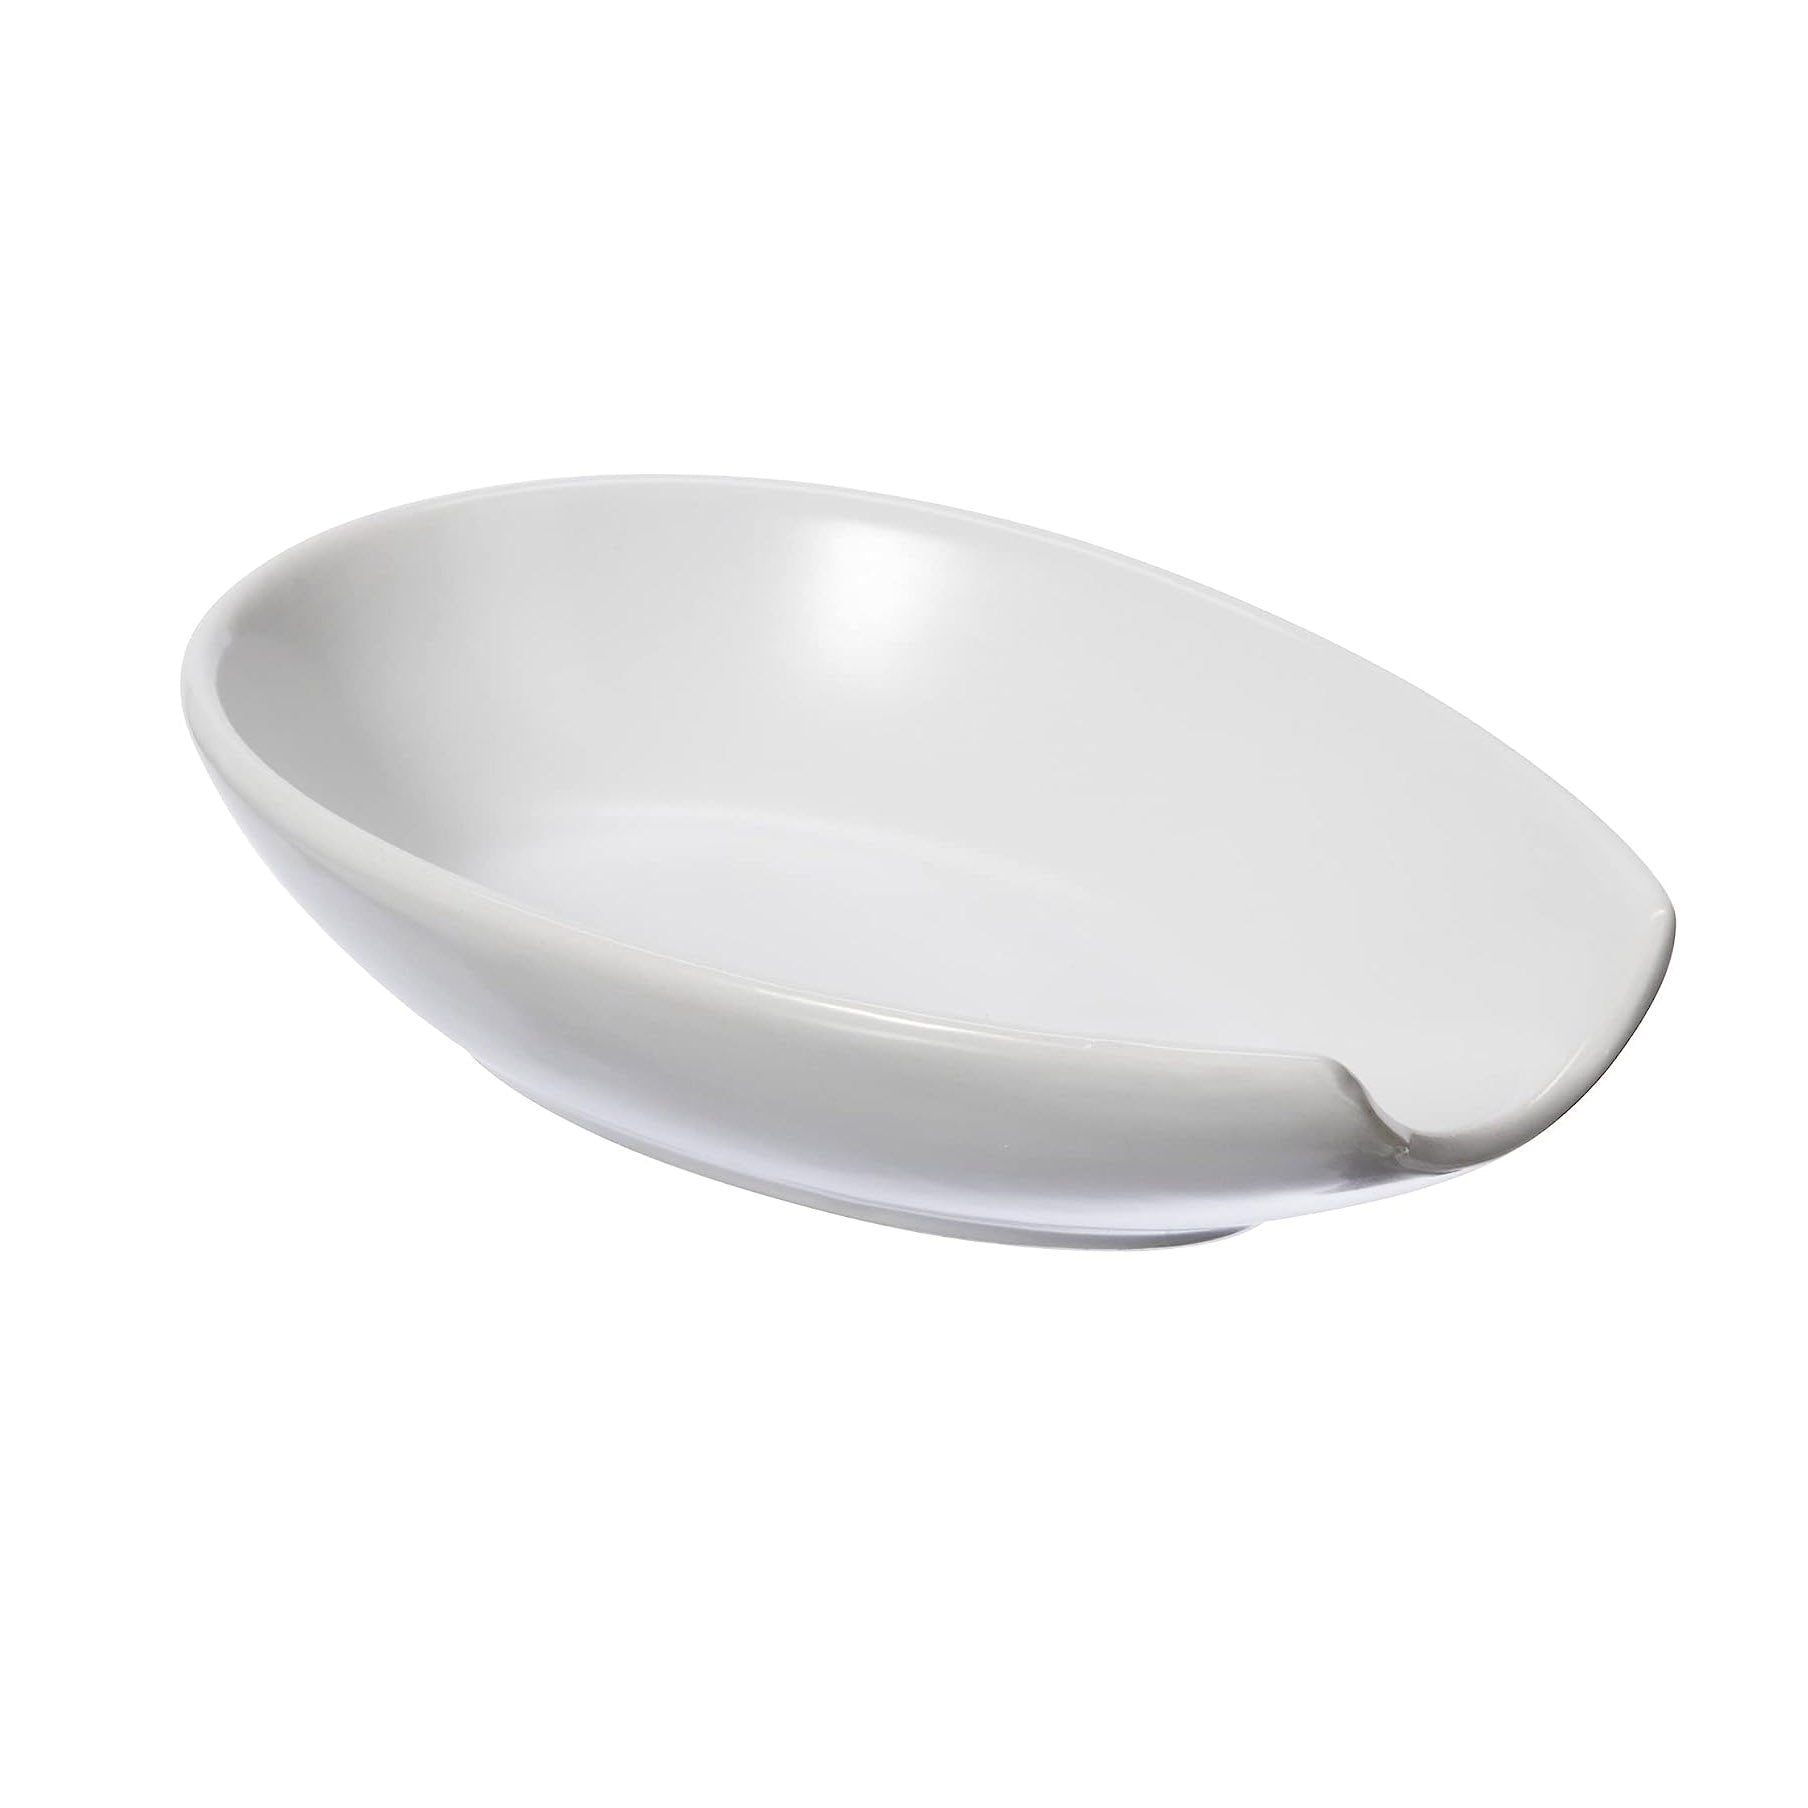 OGGI Bakeware Accessories Oggi Ceramic Spoon Rest, White